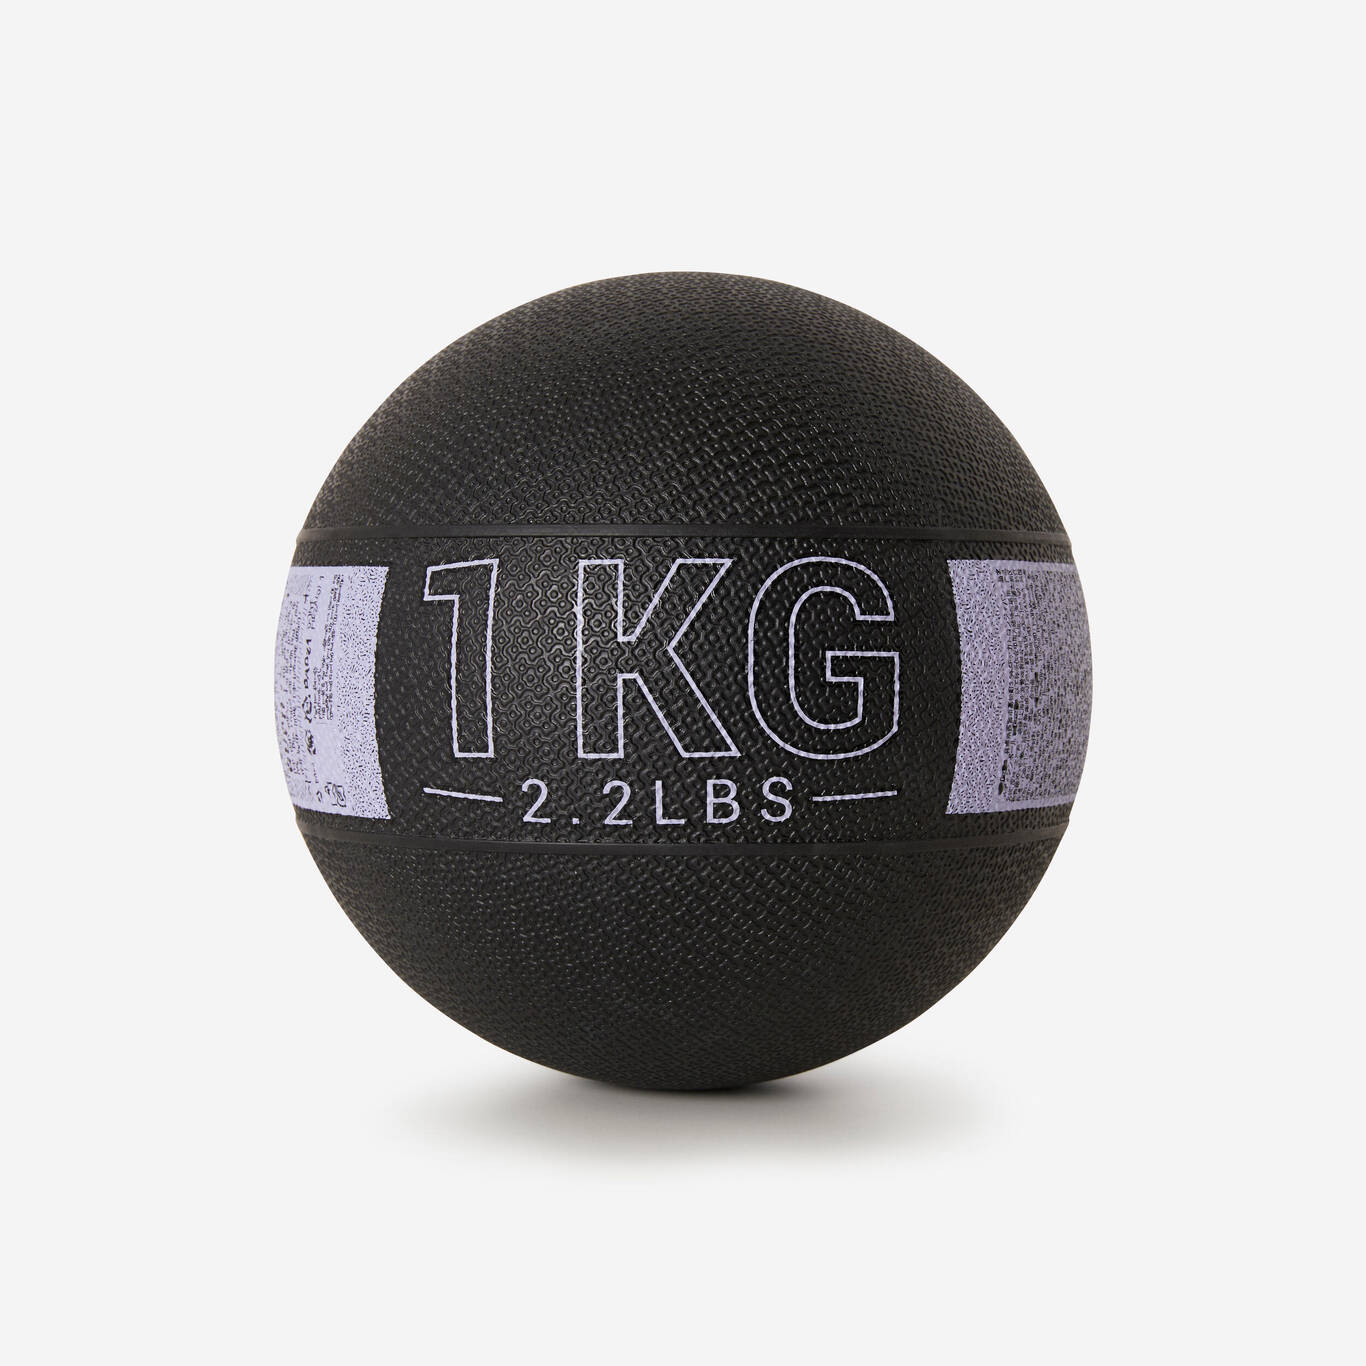 1 kg Rubber Medicine Ball - Black/Grey